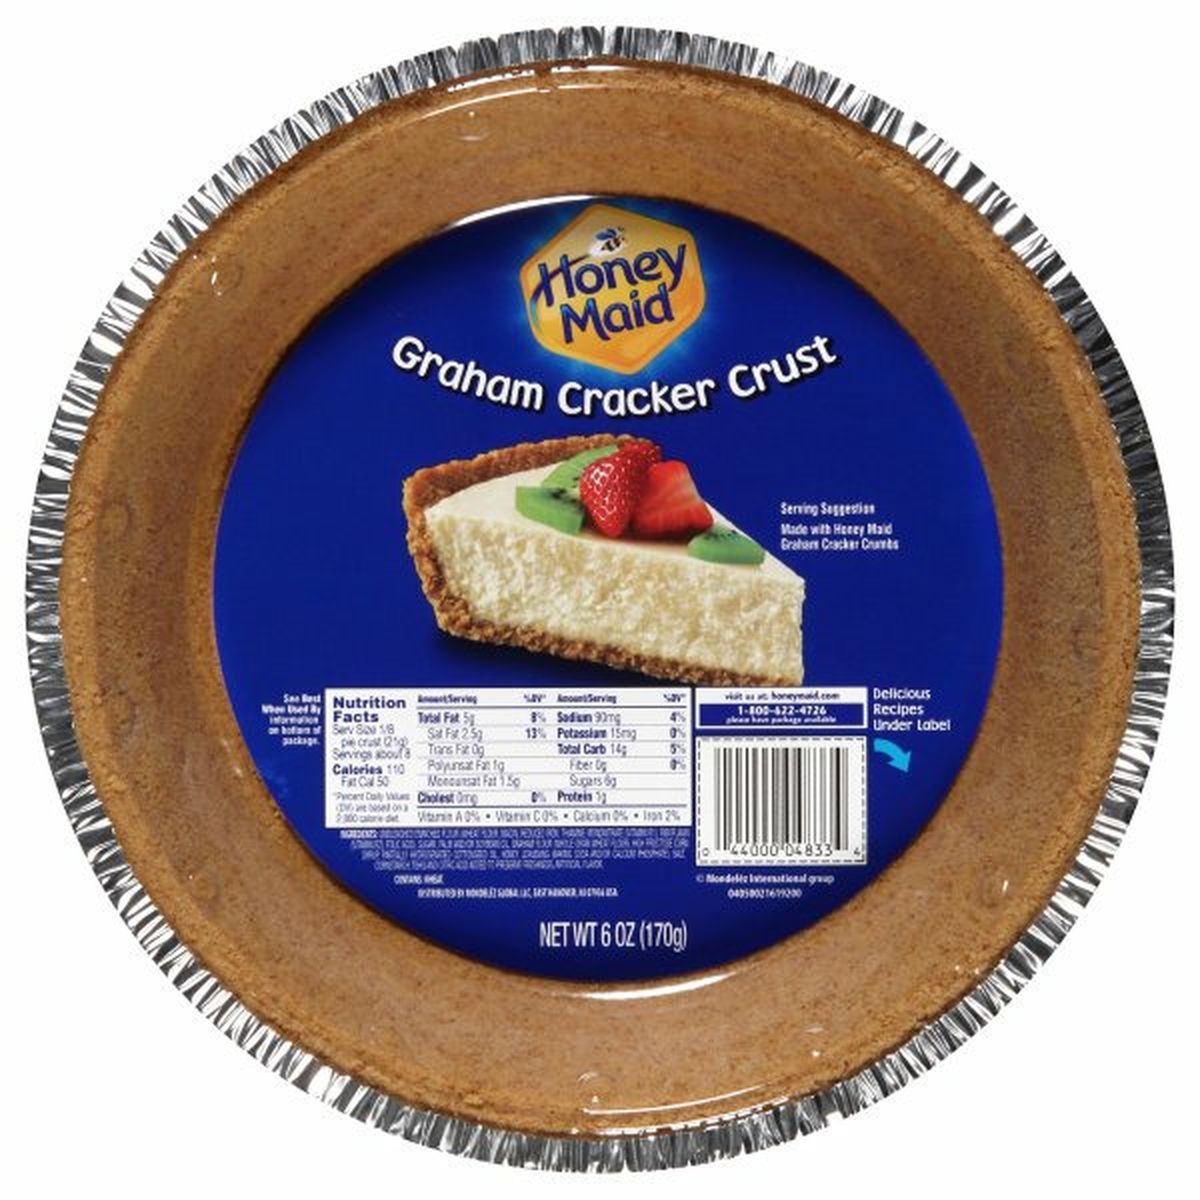 Calories in Honey Maid Graham Cracker Crust